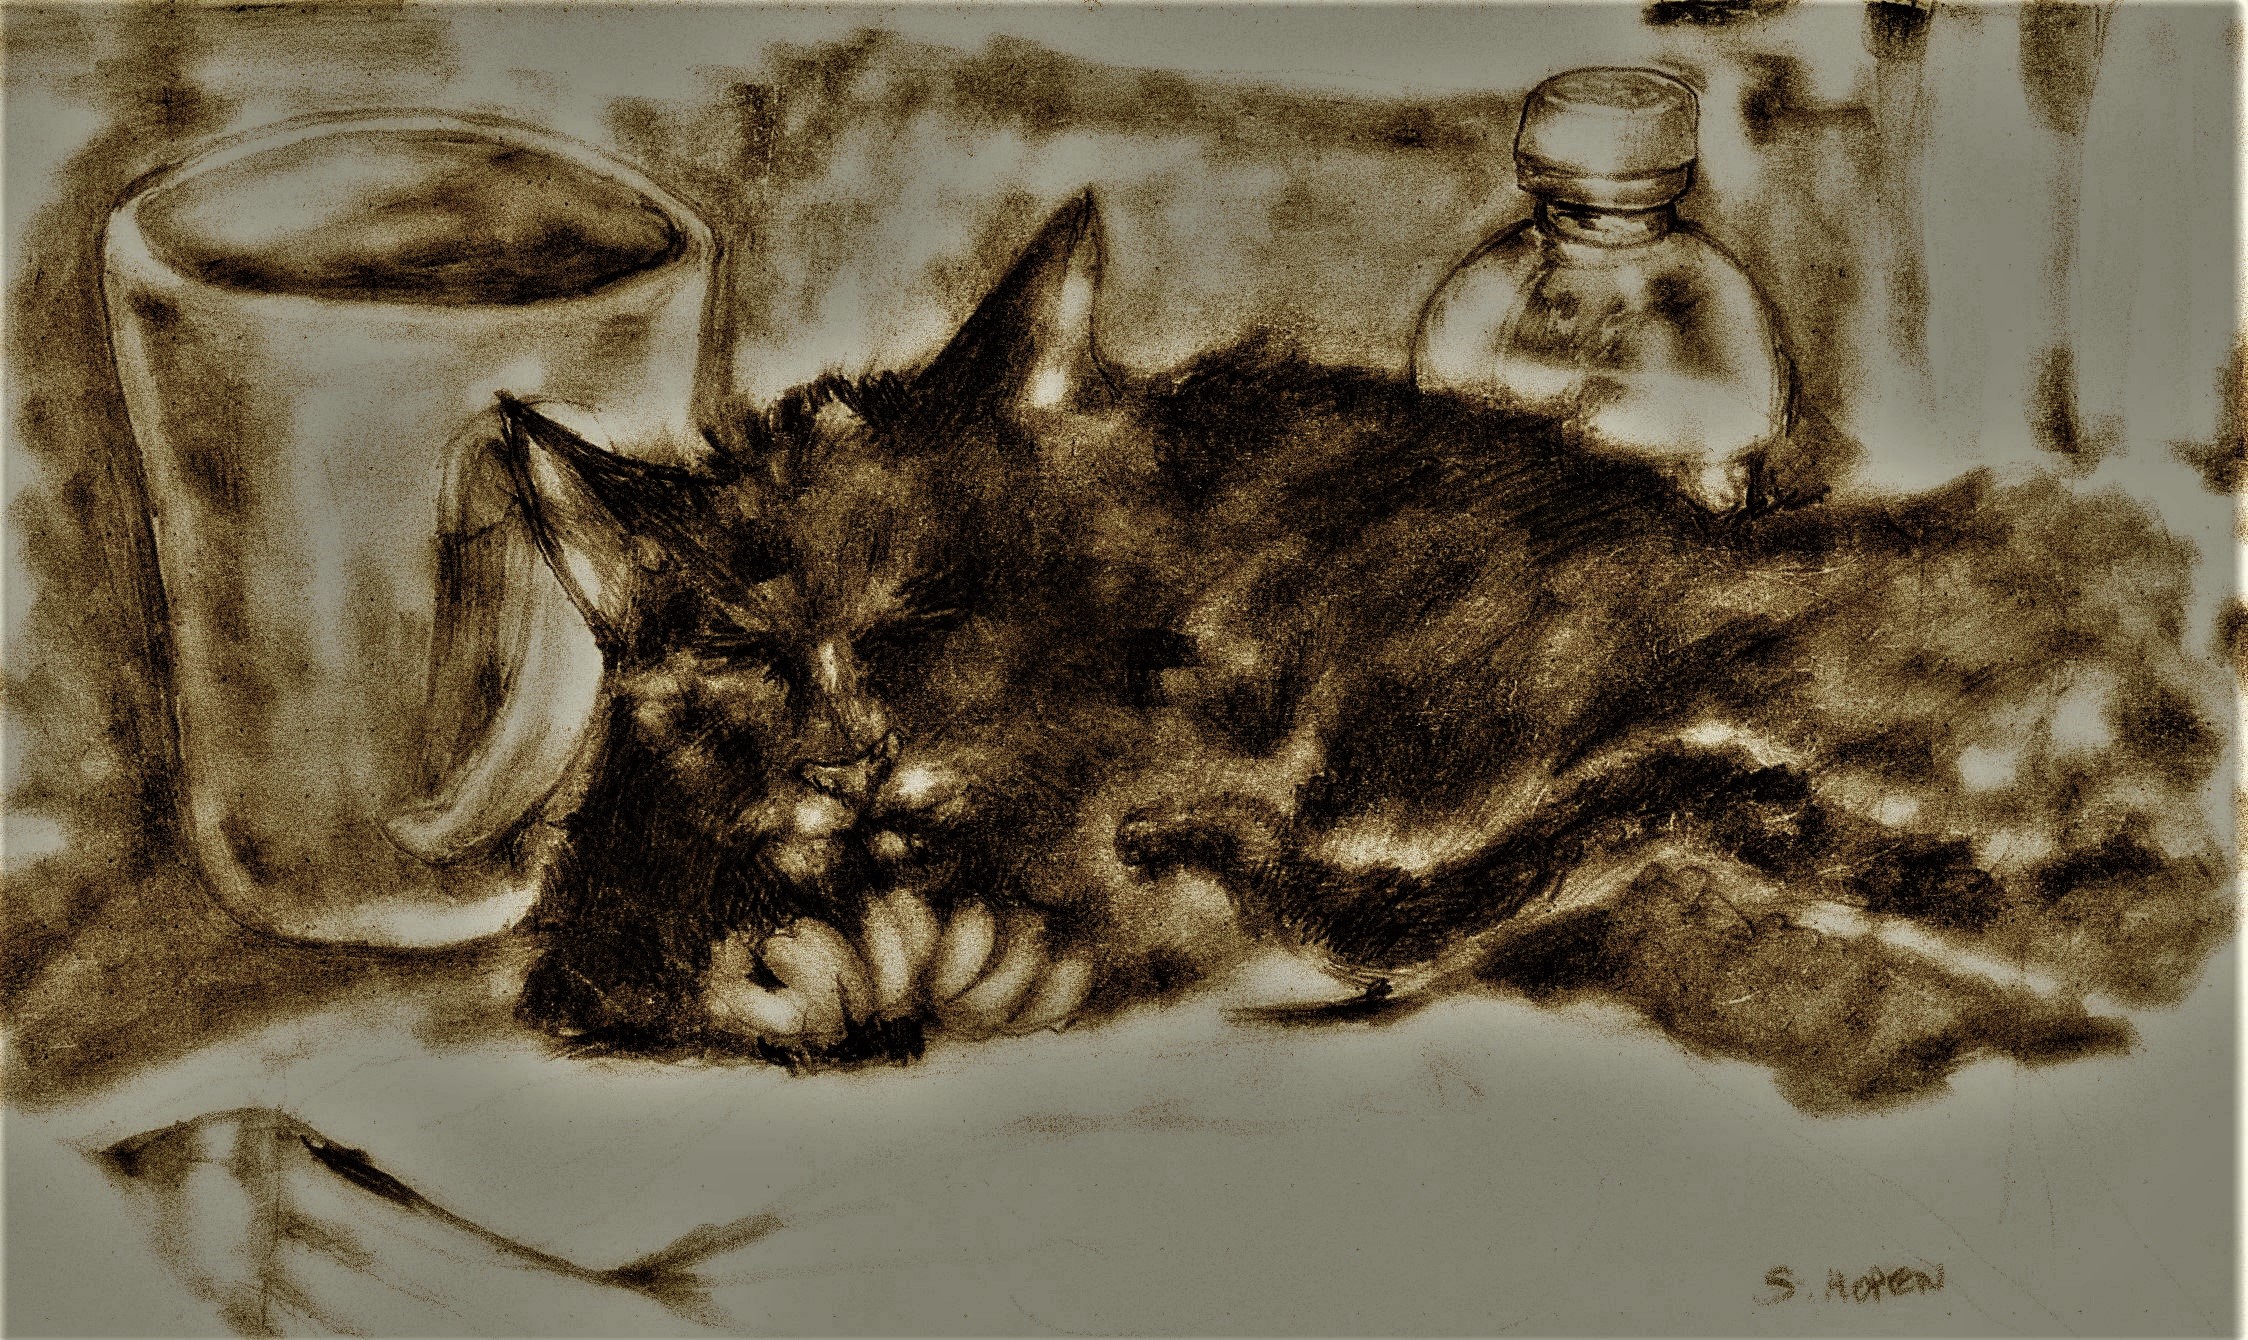 Sleeping-Black-Cat